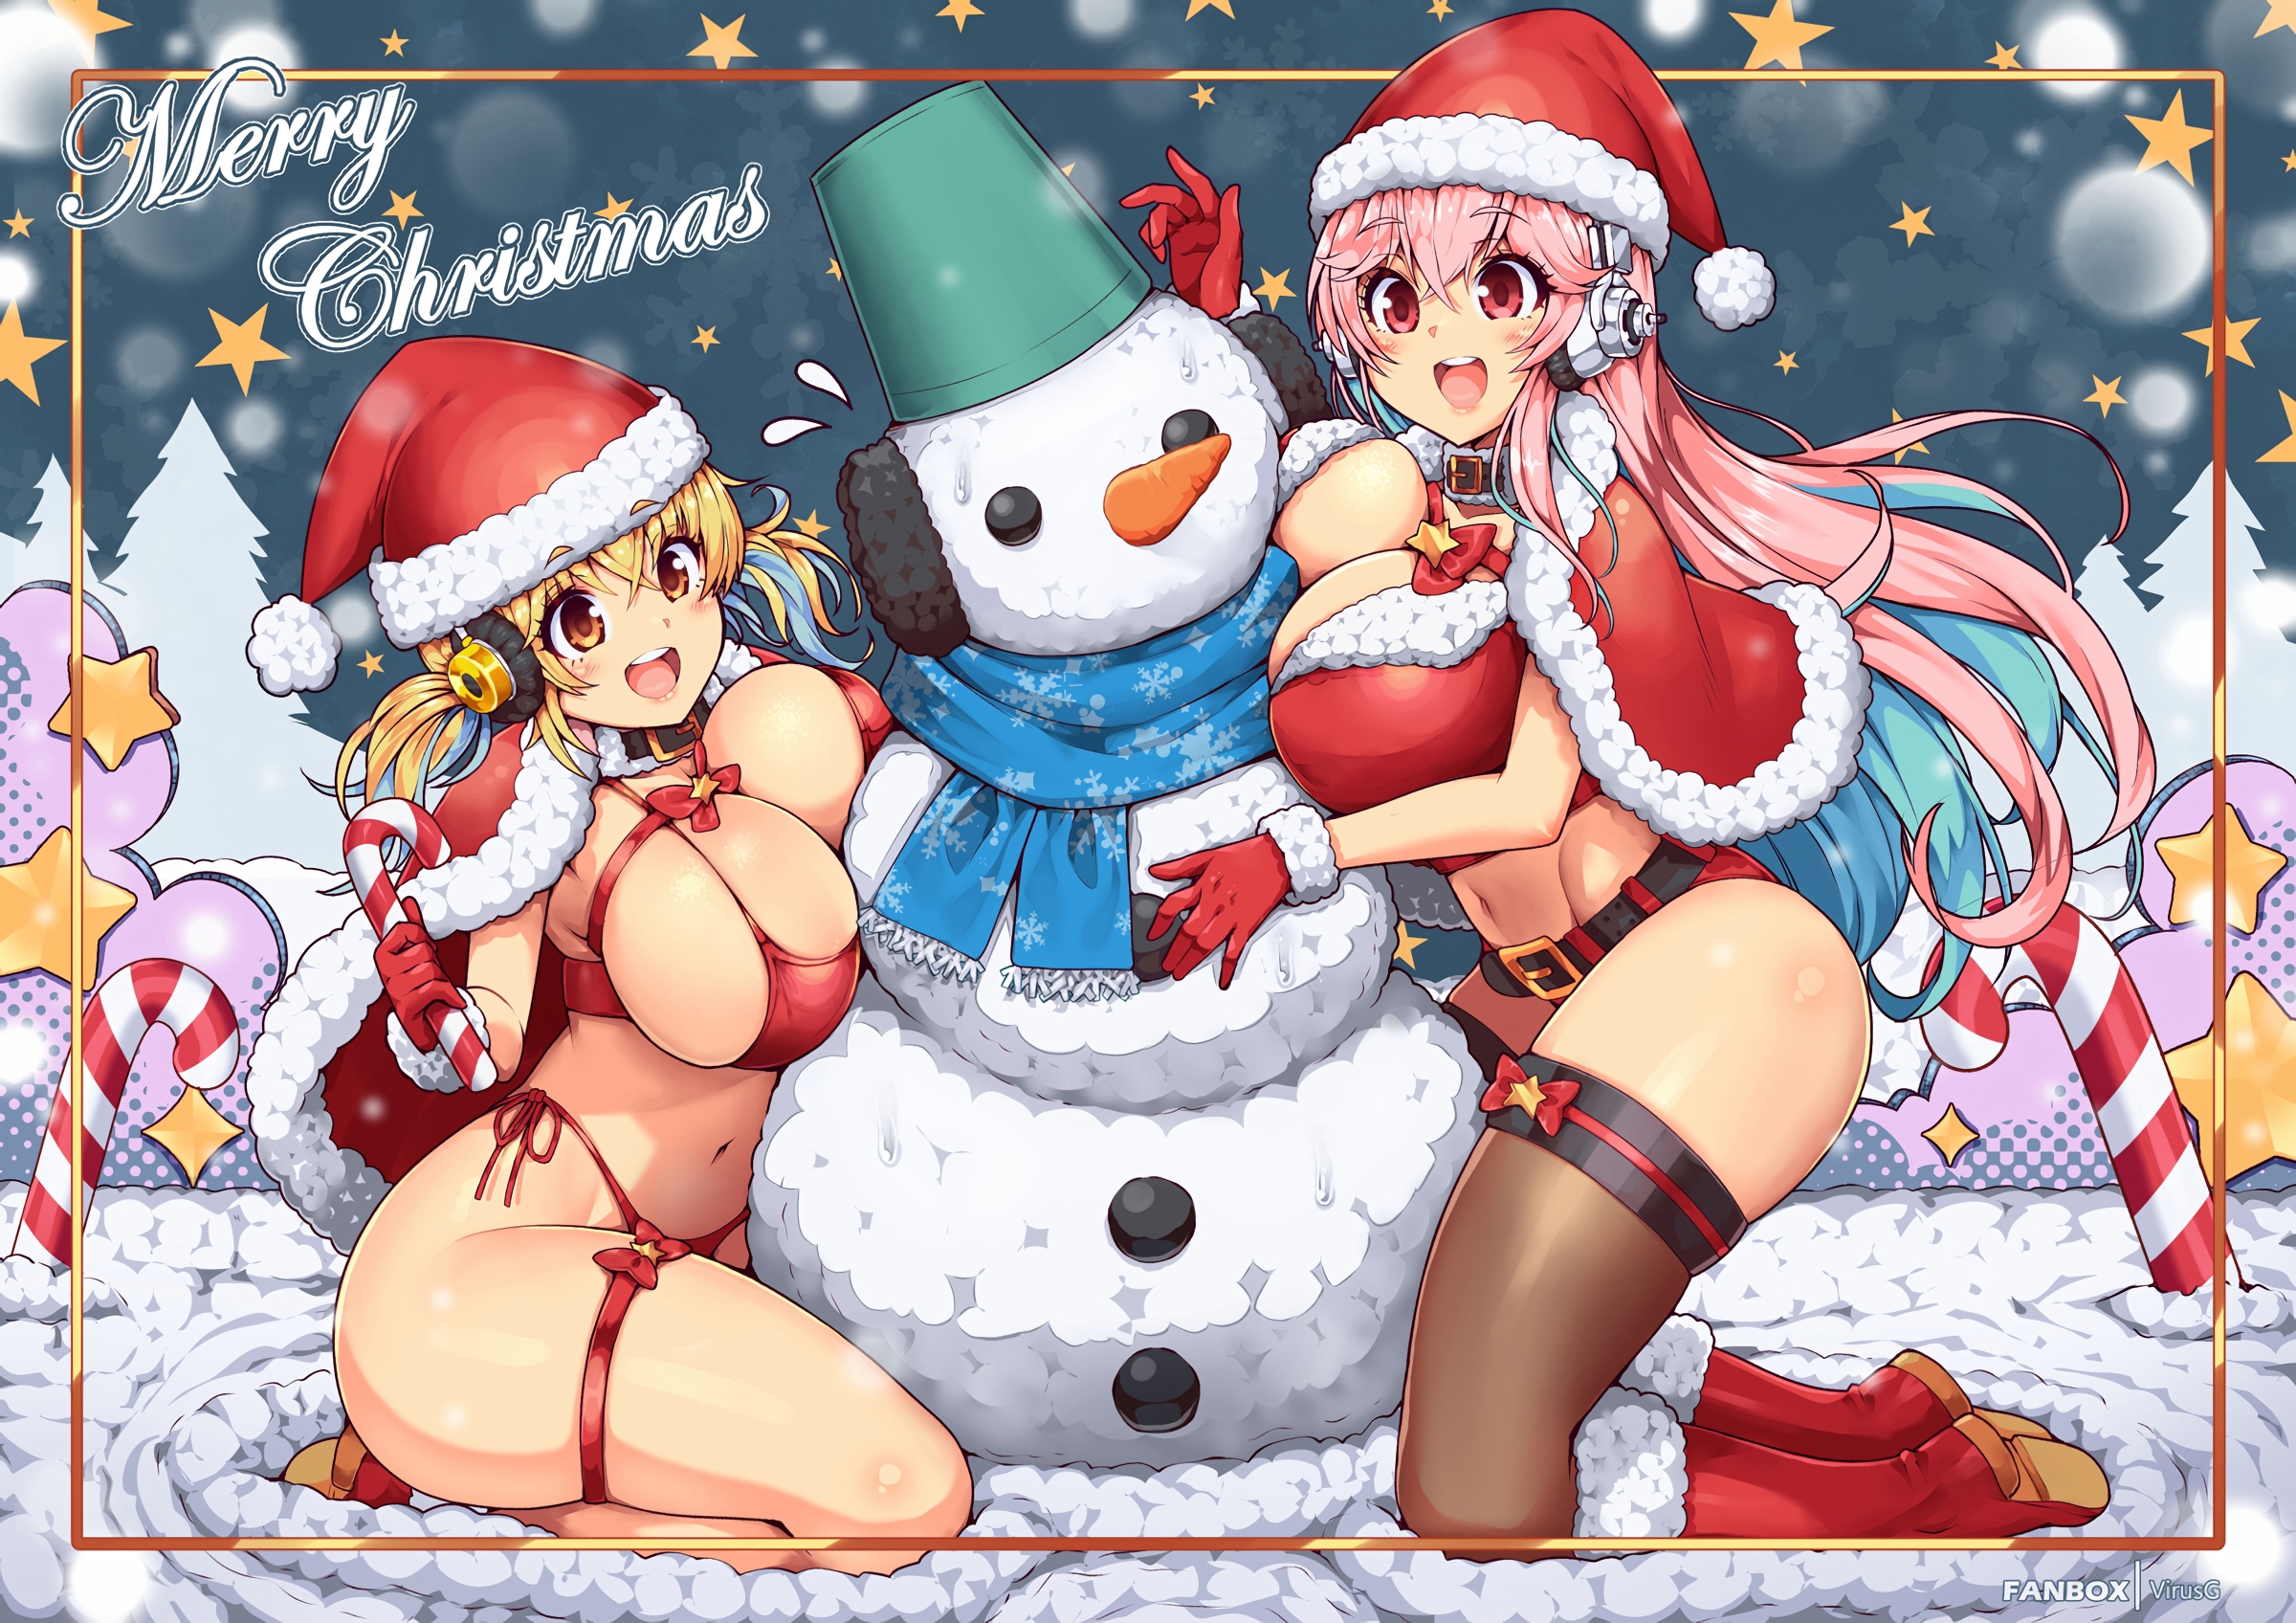 Anime 2400x1696 big boobs long hair blonde pink hair stockings snowman panties ass anime girls Christmas Christmas clothes scarf ear muffs snow Candy Cane headphones two tone hair stars two women Santa hats